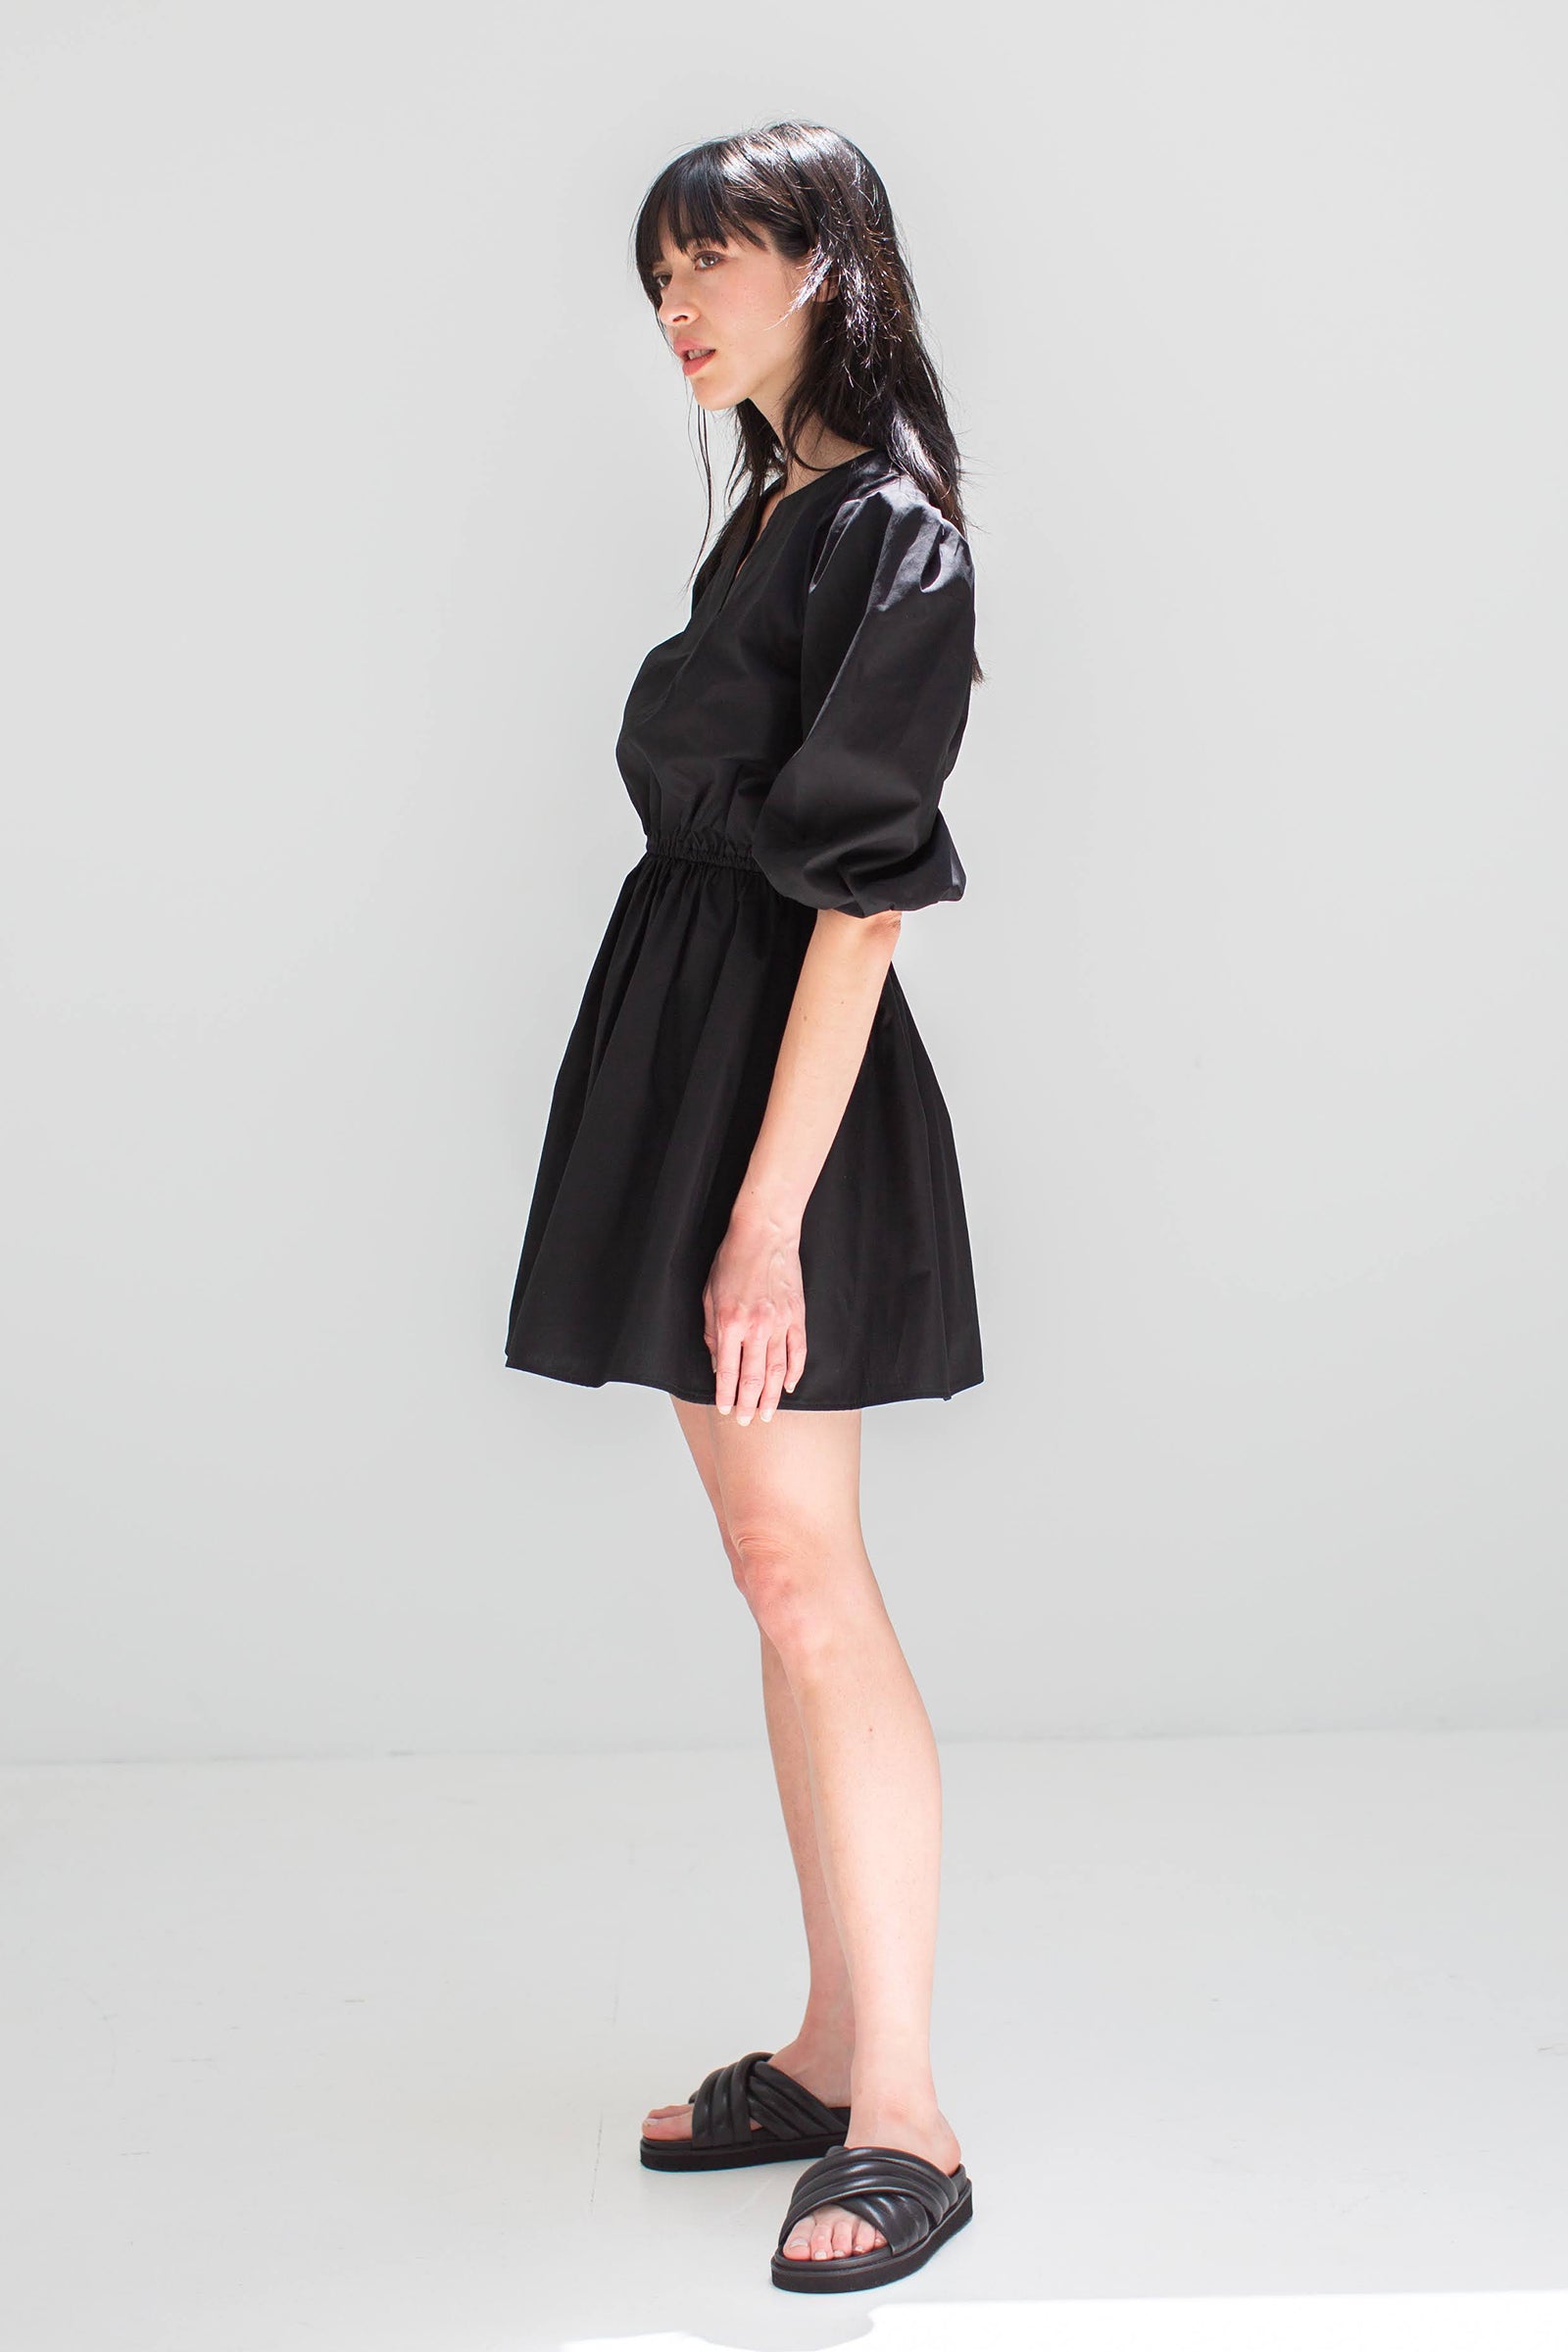 Klein Mini Dress in Black